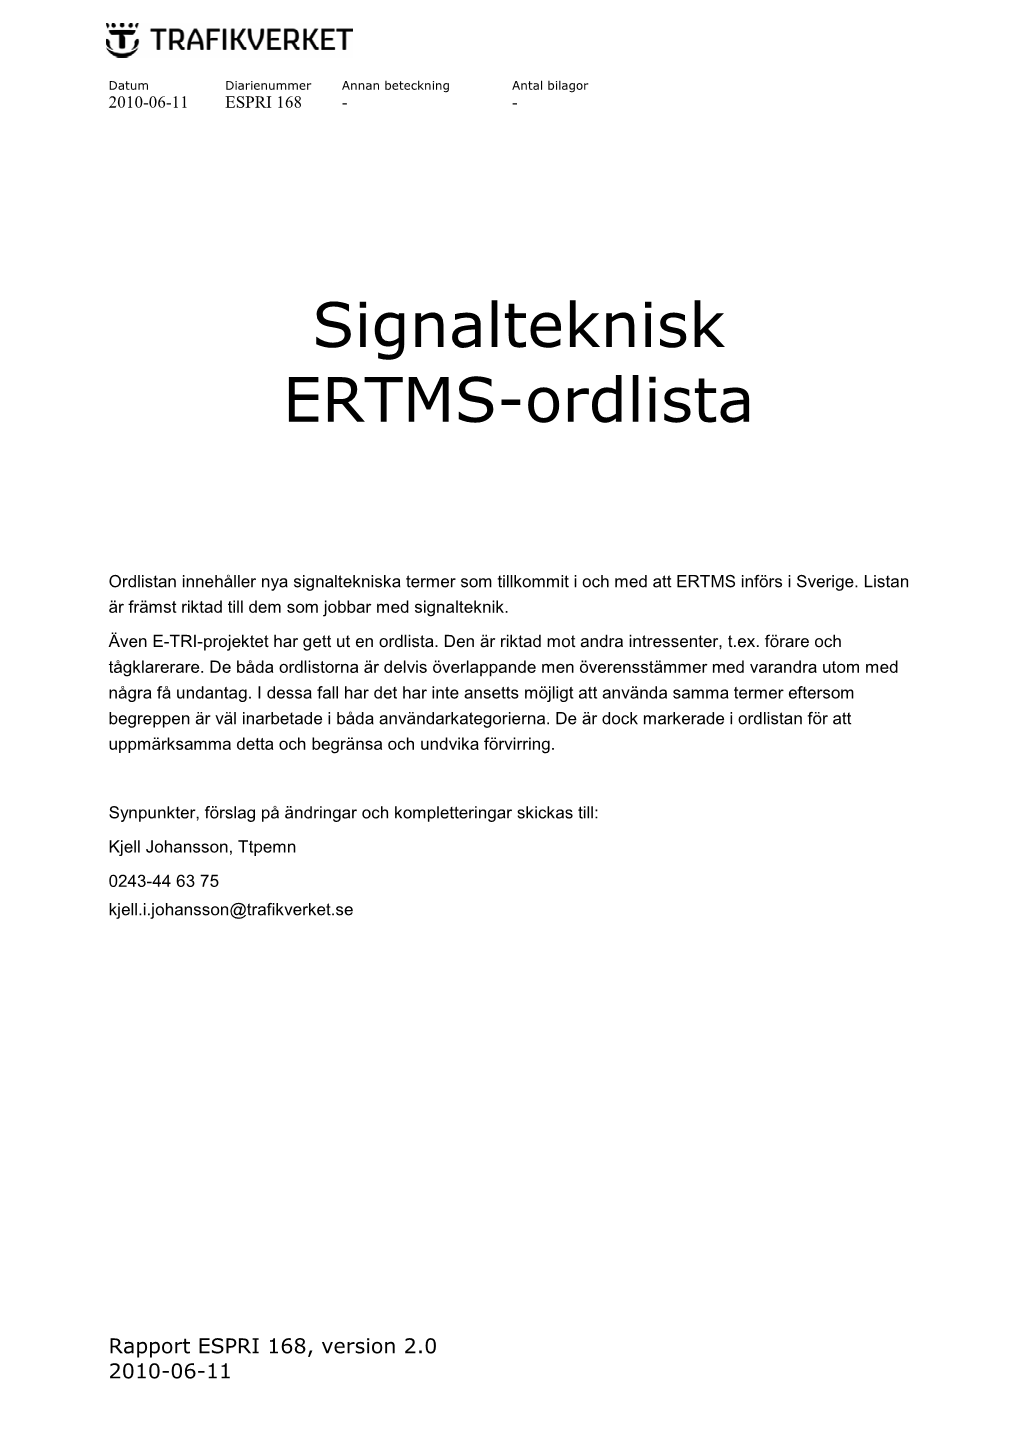 Signalteknisk ERTMS-Ordlista